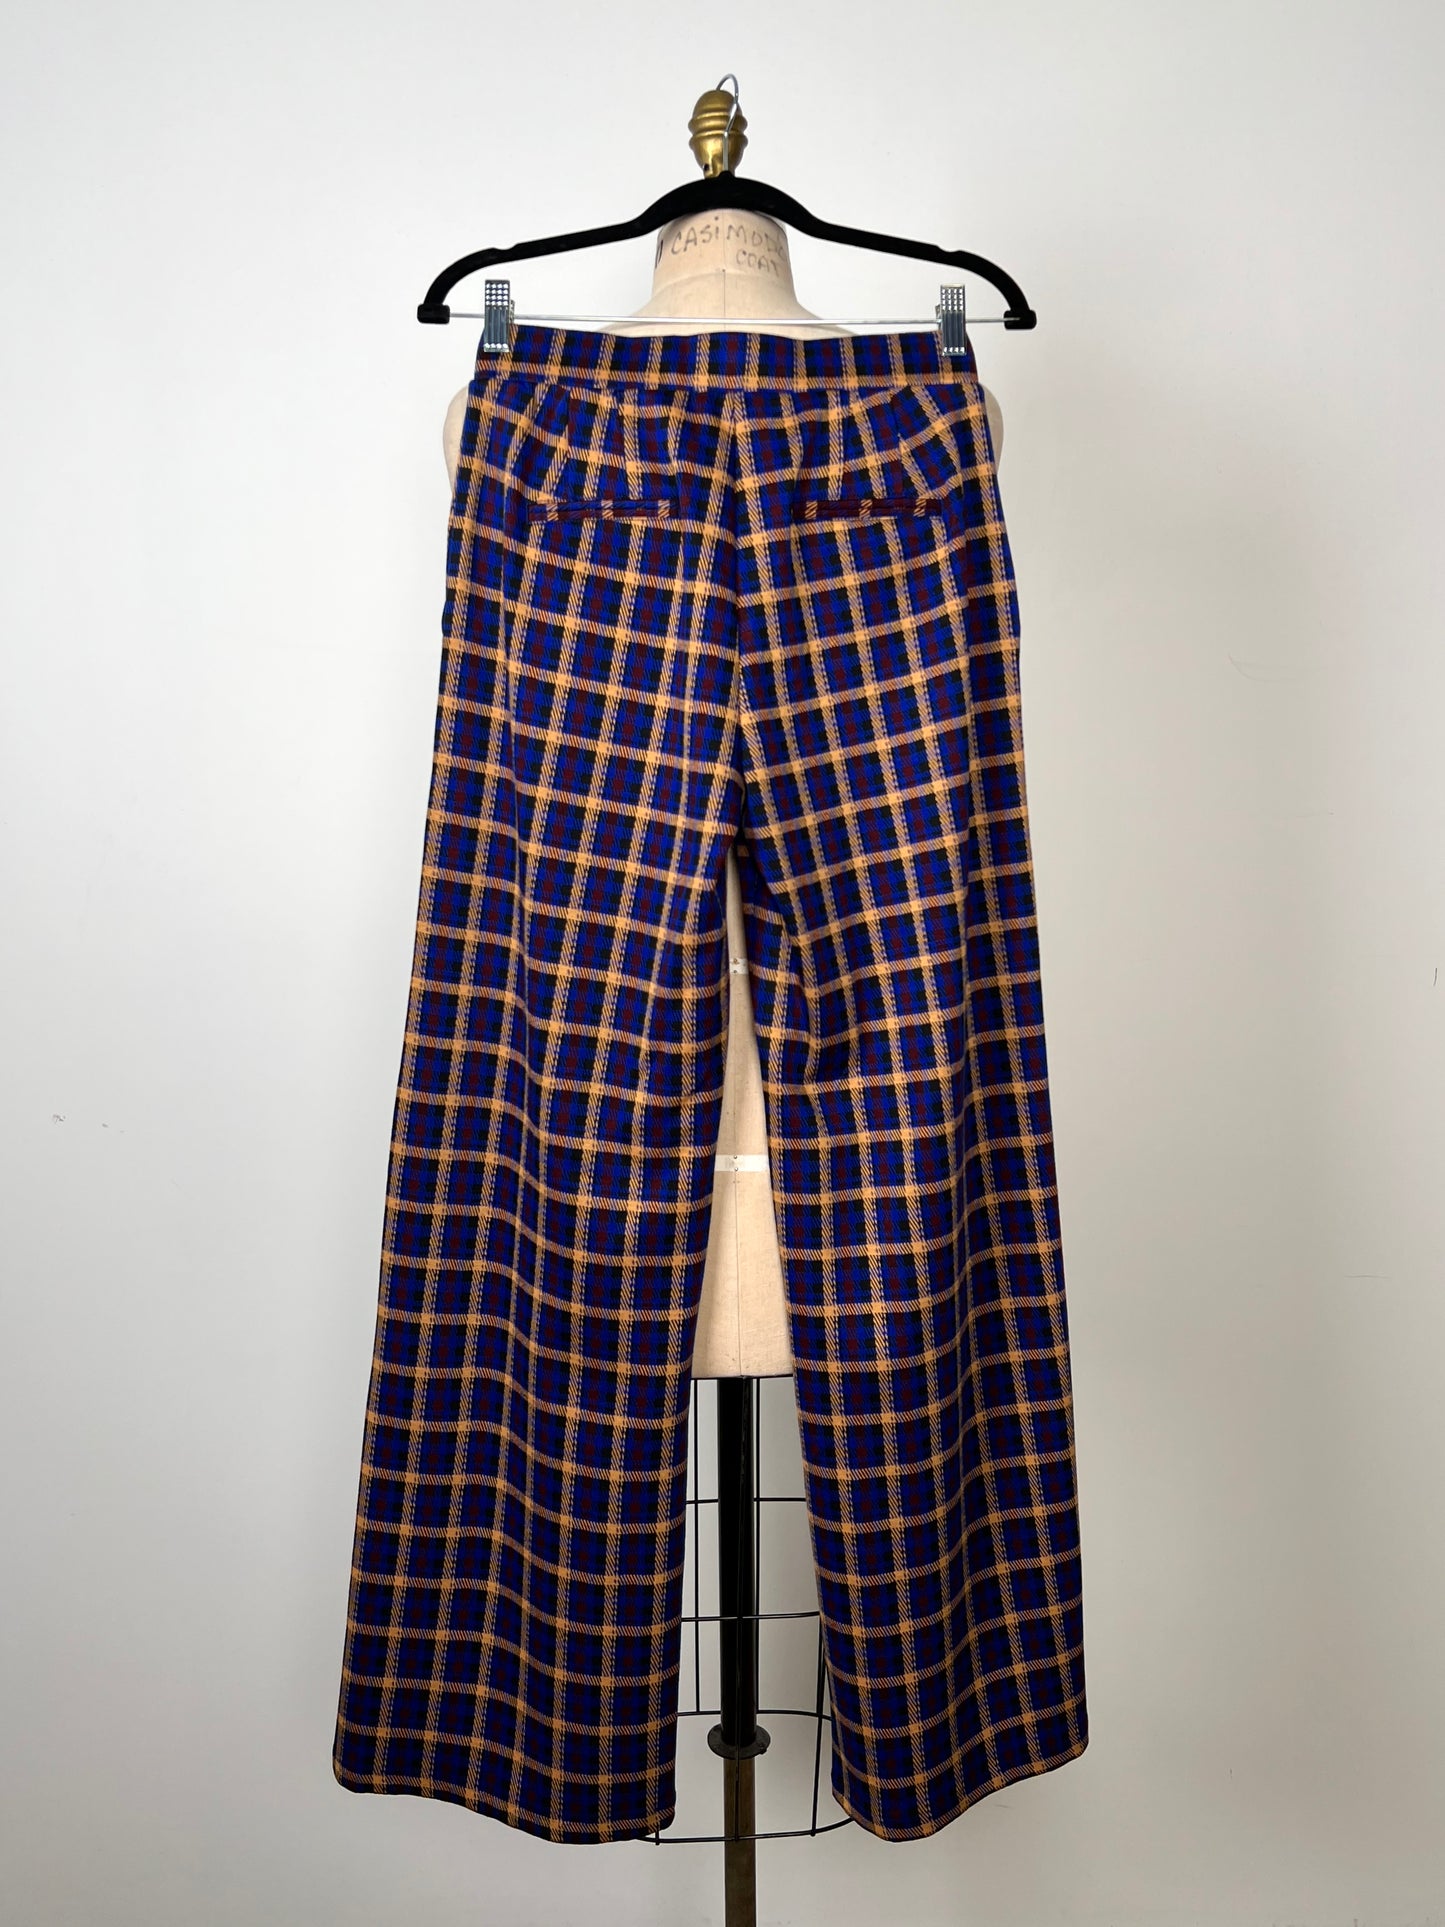 Pantalon tartan bleu électrique  (S)